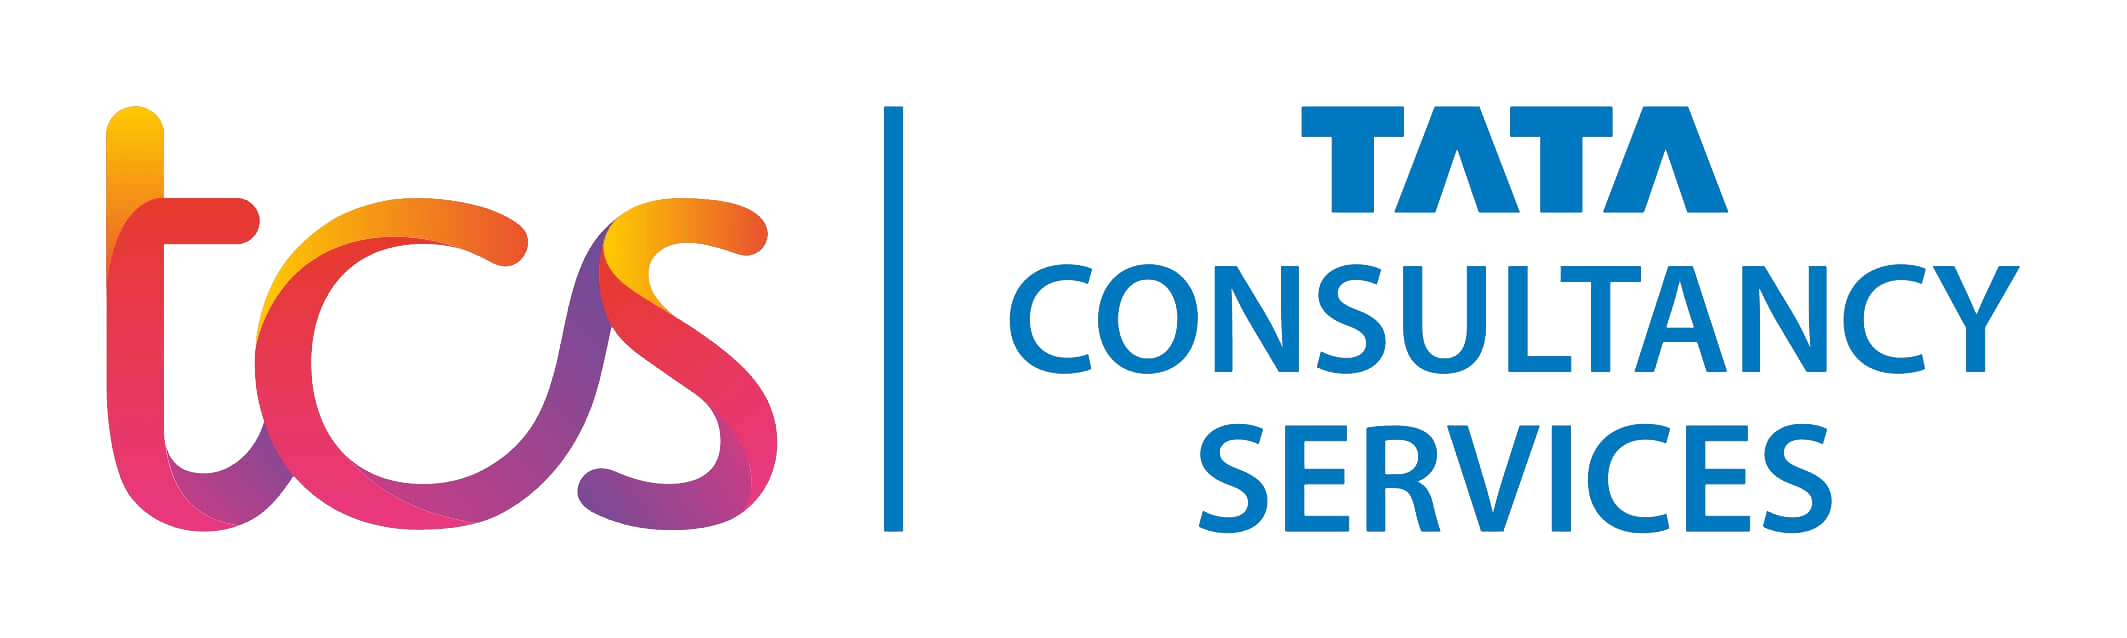 TCS-logo-new